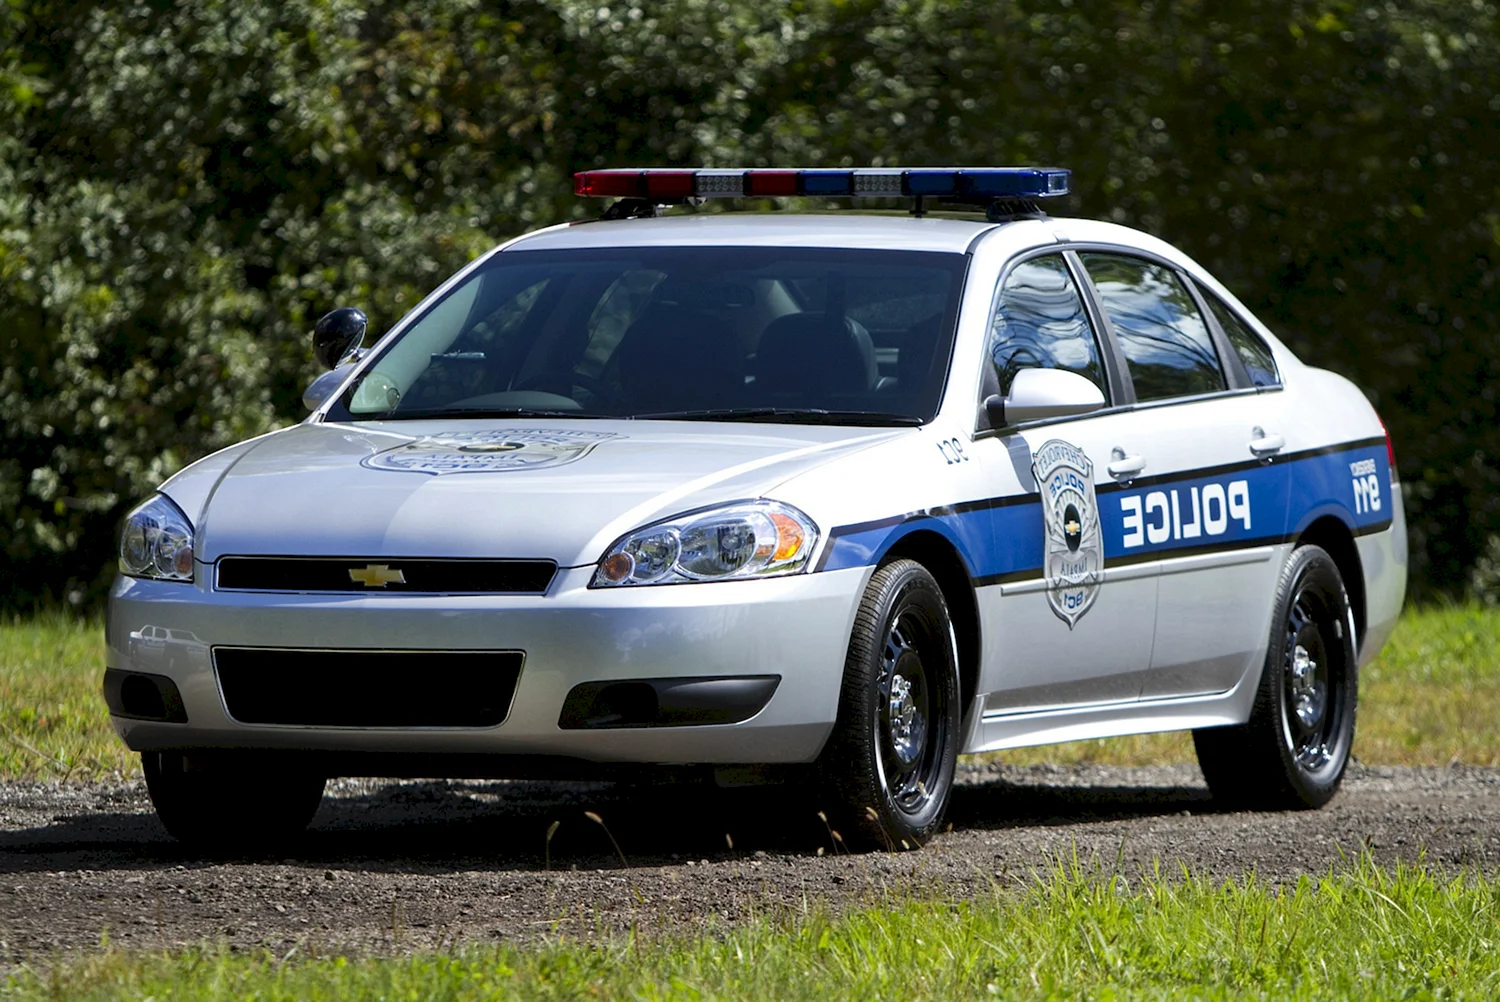 Chevrolet Impala 2000 Police